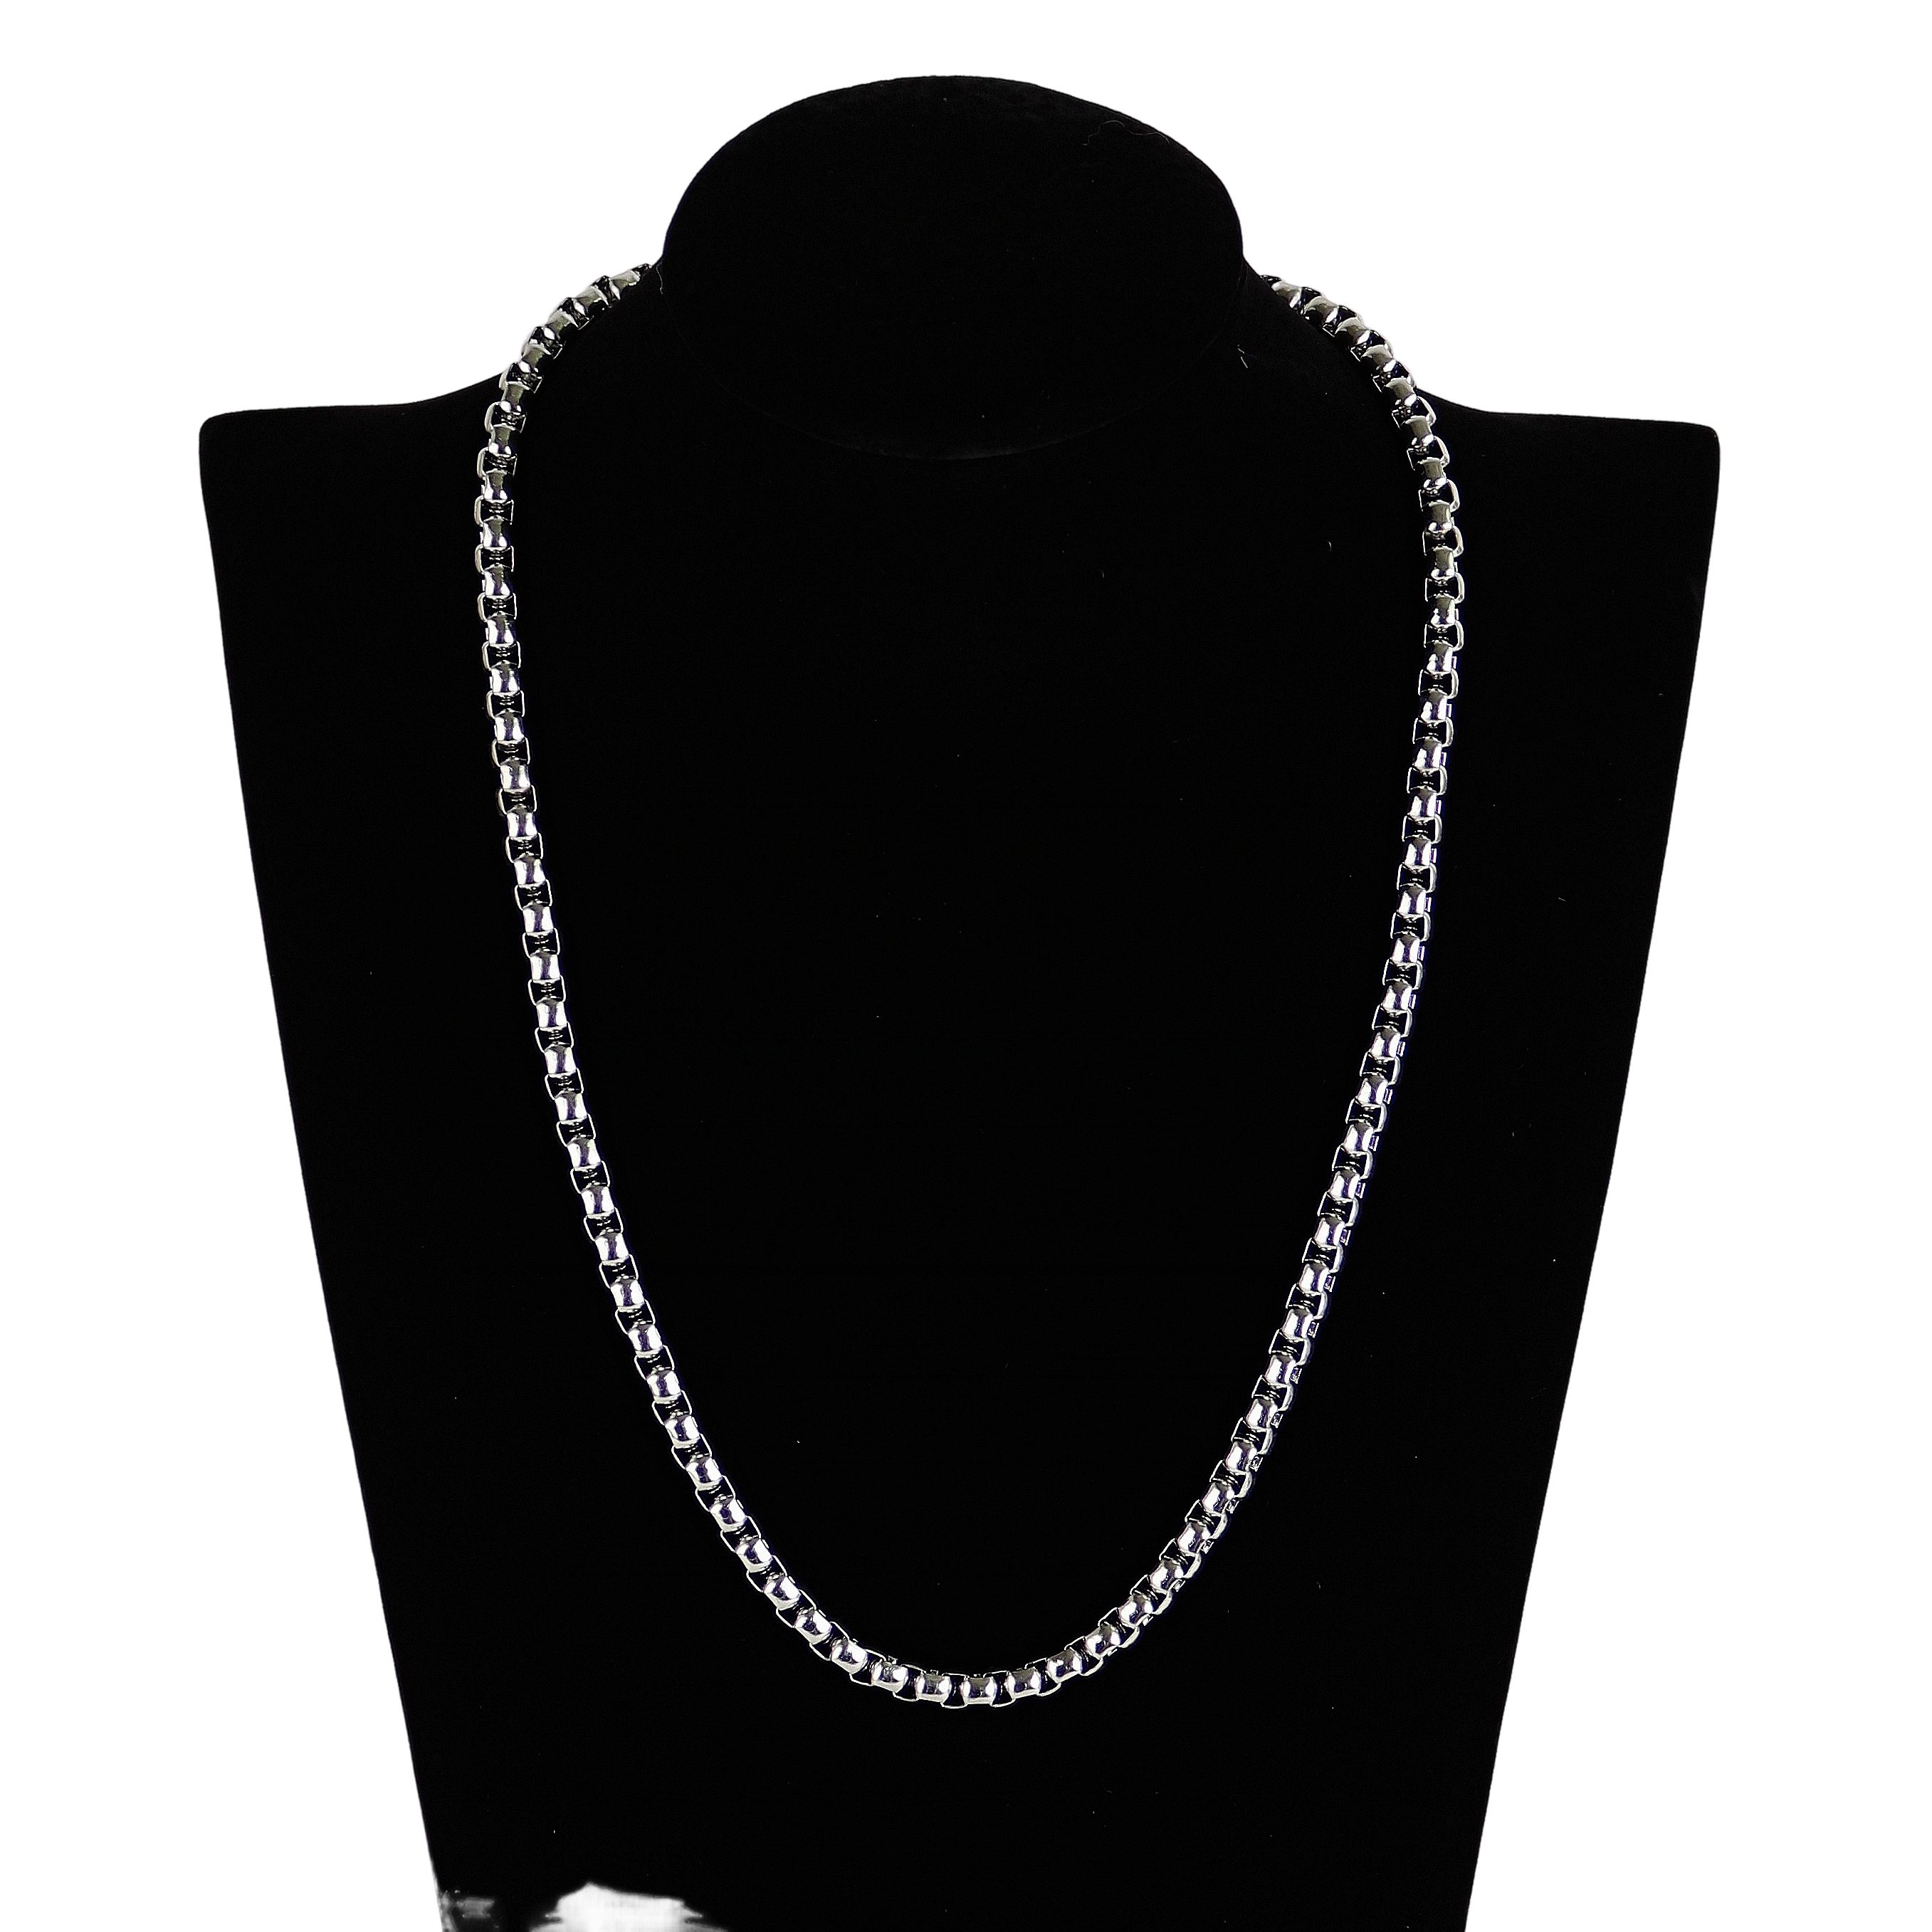 MIRROSI Kette ohne Anhänger Herren Edelstahlkette, Königskette, Halskette, 5mm dick, Kette 60cm Lang, Unisex